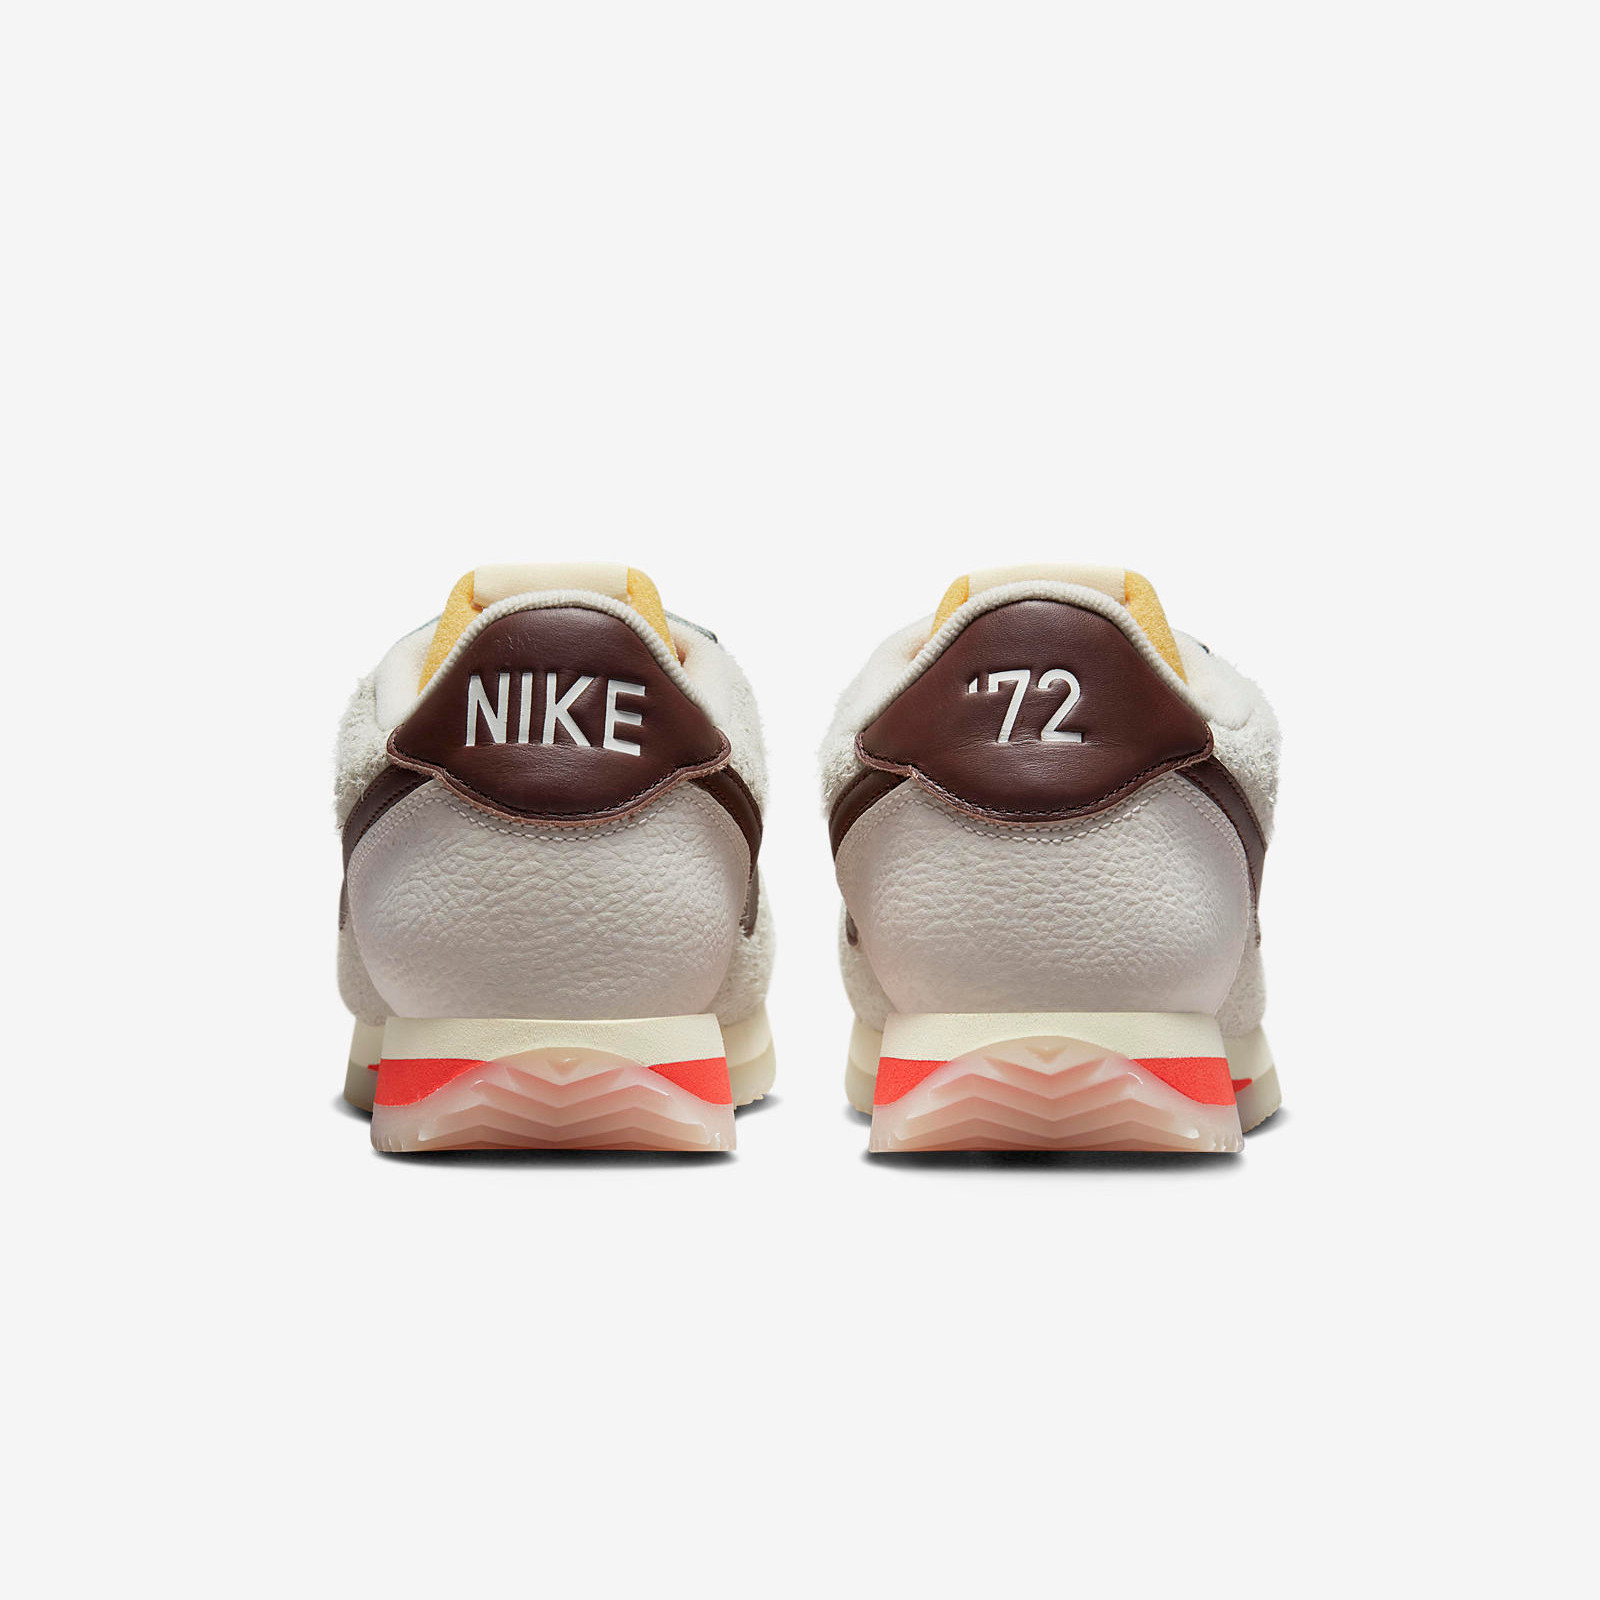 Nike Cortez
« Orewood Brown »